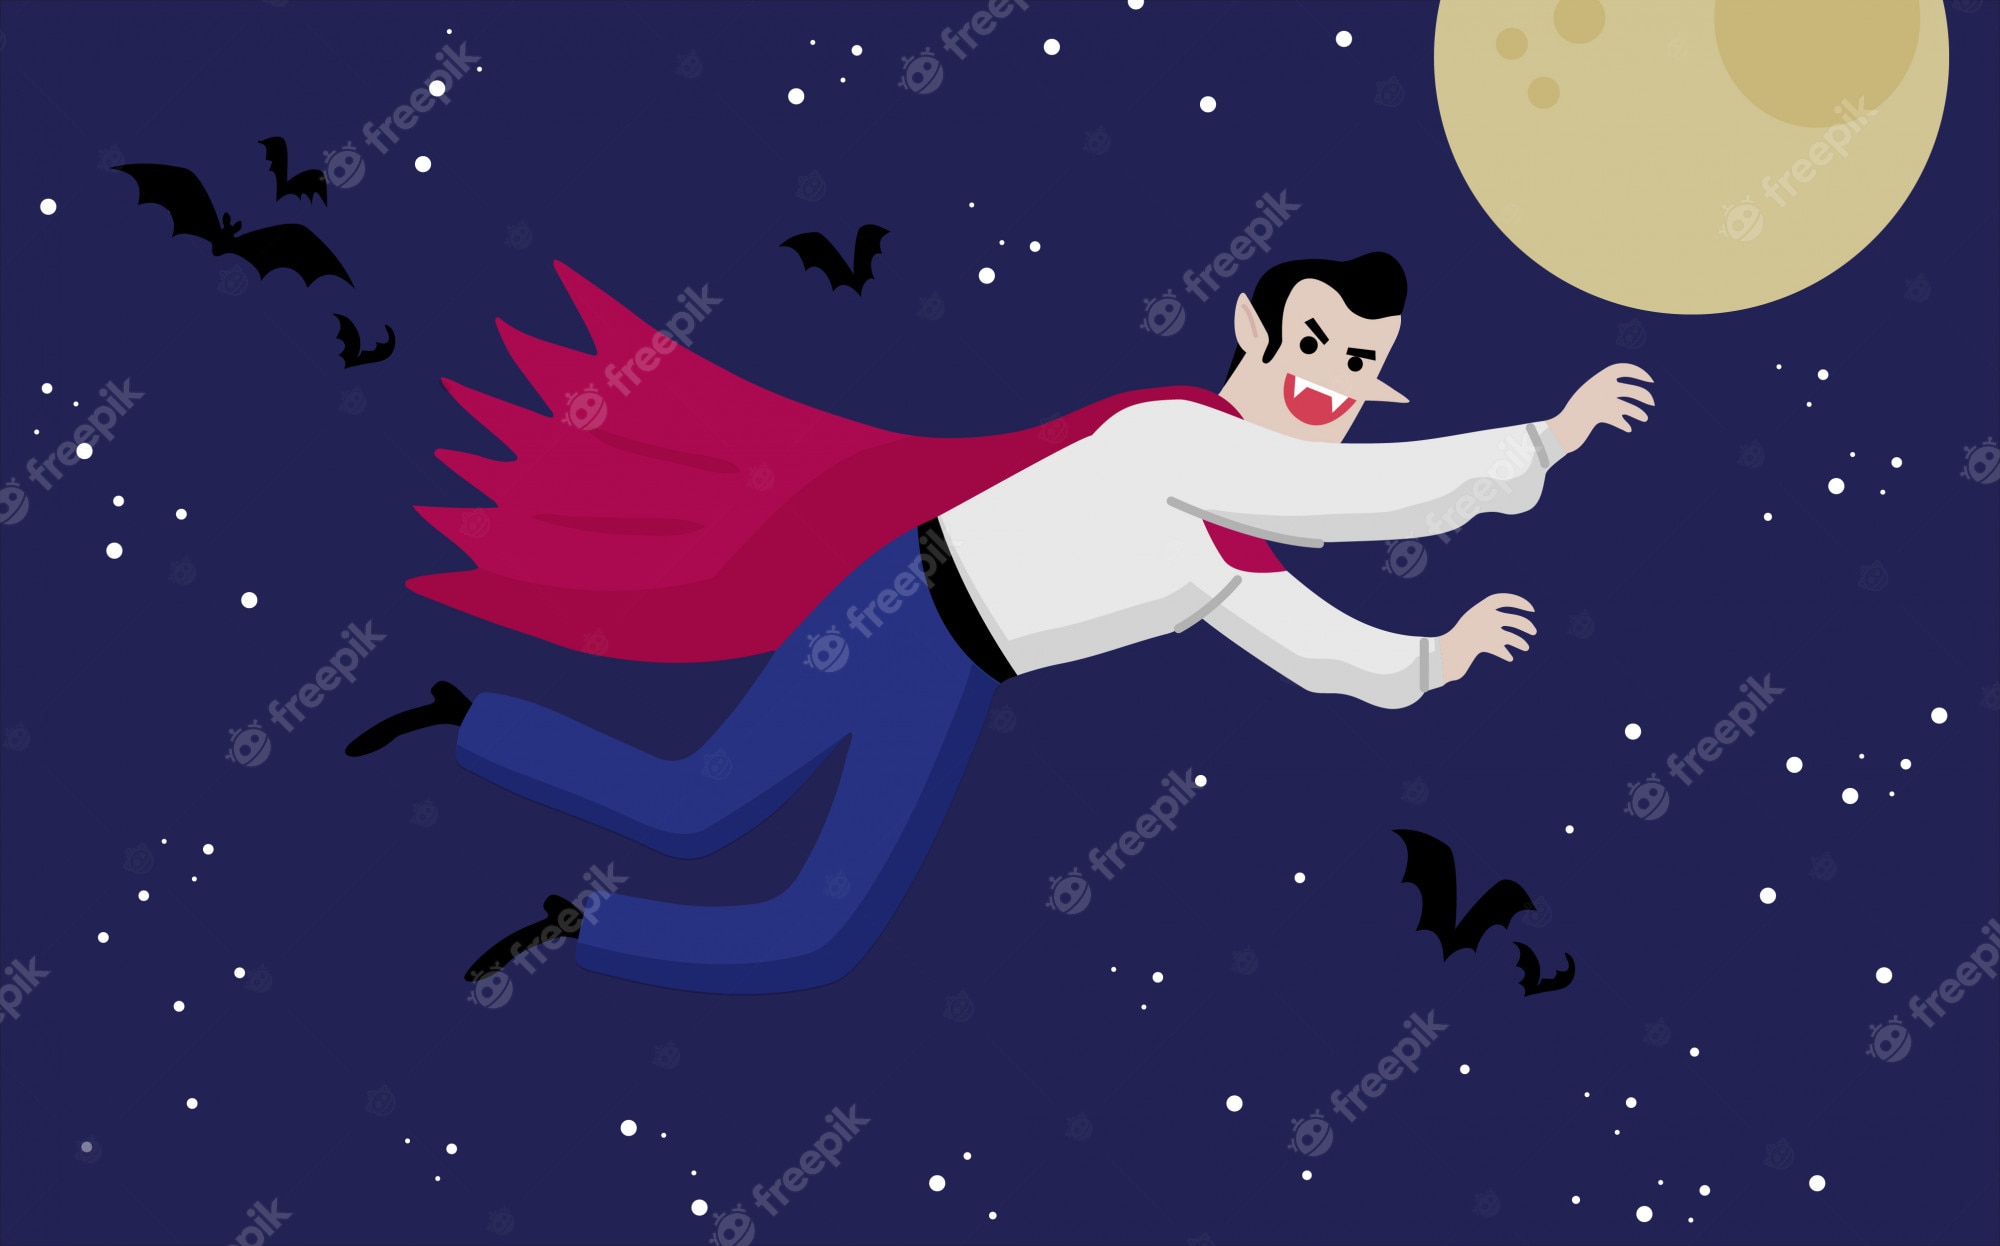 Vampiro volando de noche